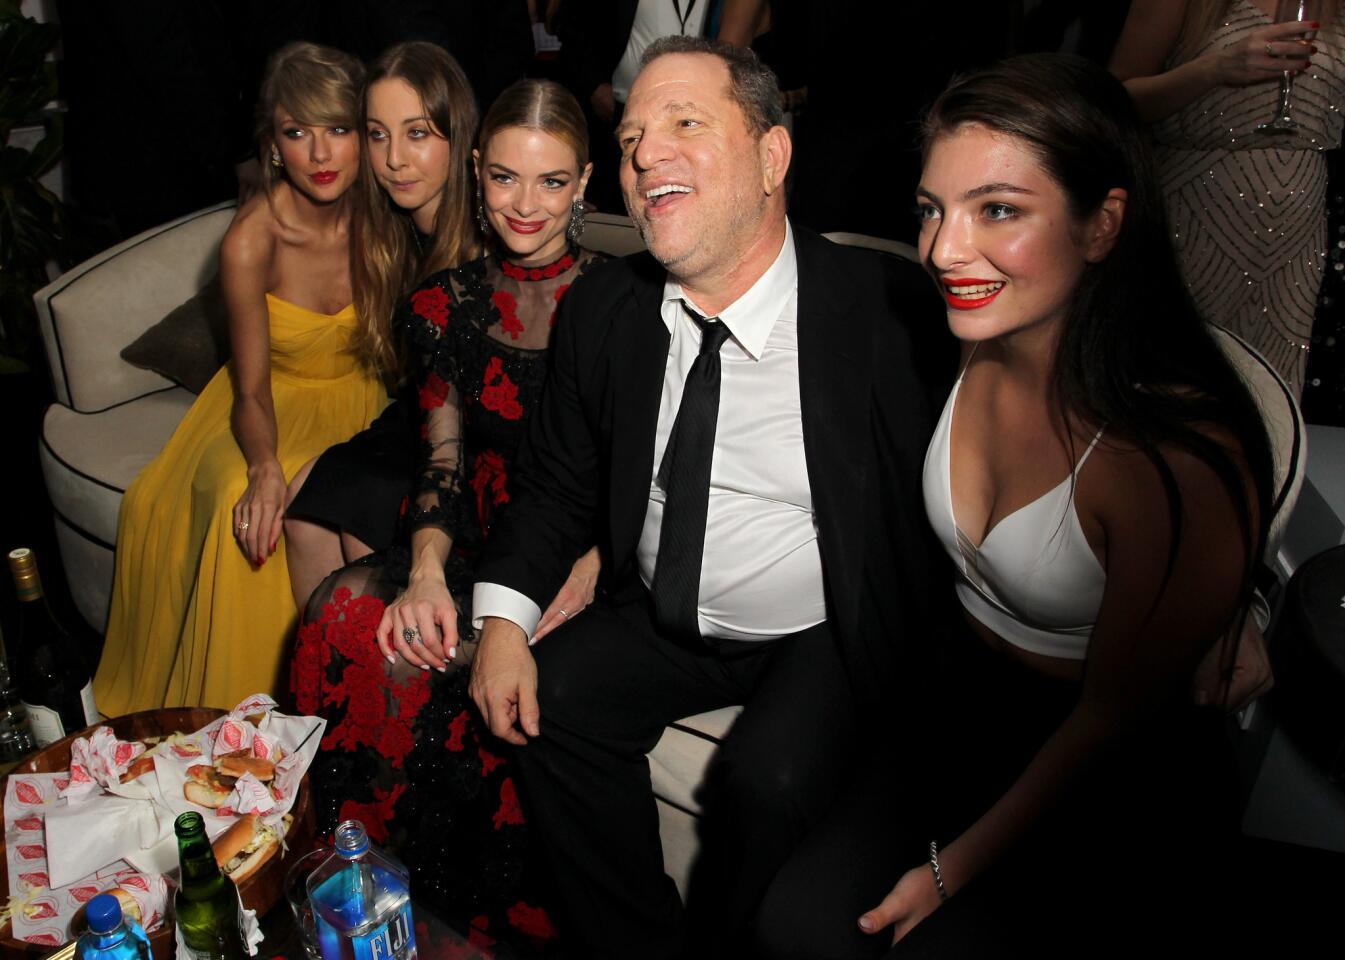 Recording artist Taylor Swift, musician Este Haim, actress Jaime King, producer Harvey Weinstein and recording artist Lorde attend the Weinstein Co. & Netflix's 2015 Golden Globes afterparty at the Beverly Hilton Hotel.